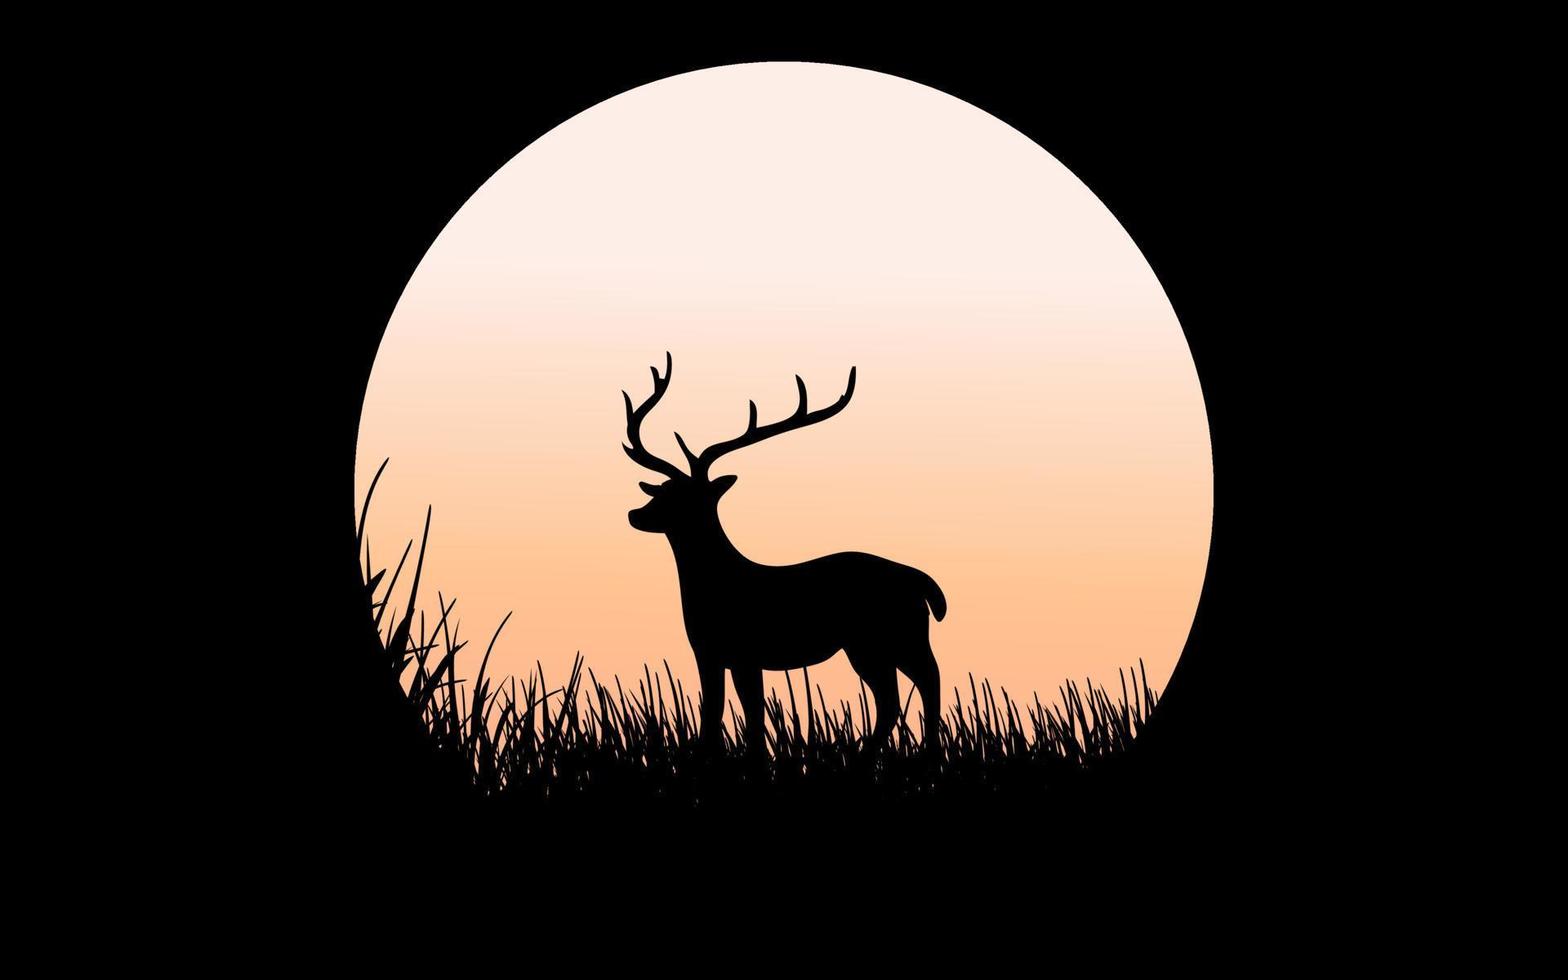 Deer silhouette on full moon vector